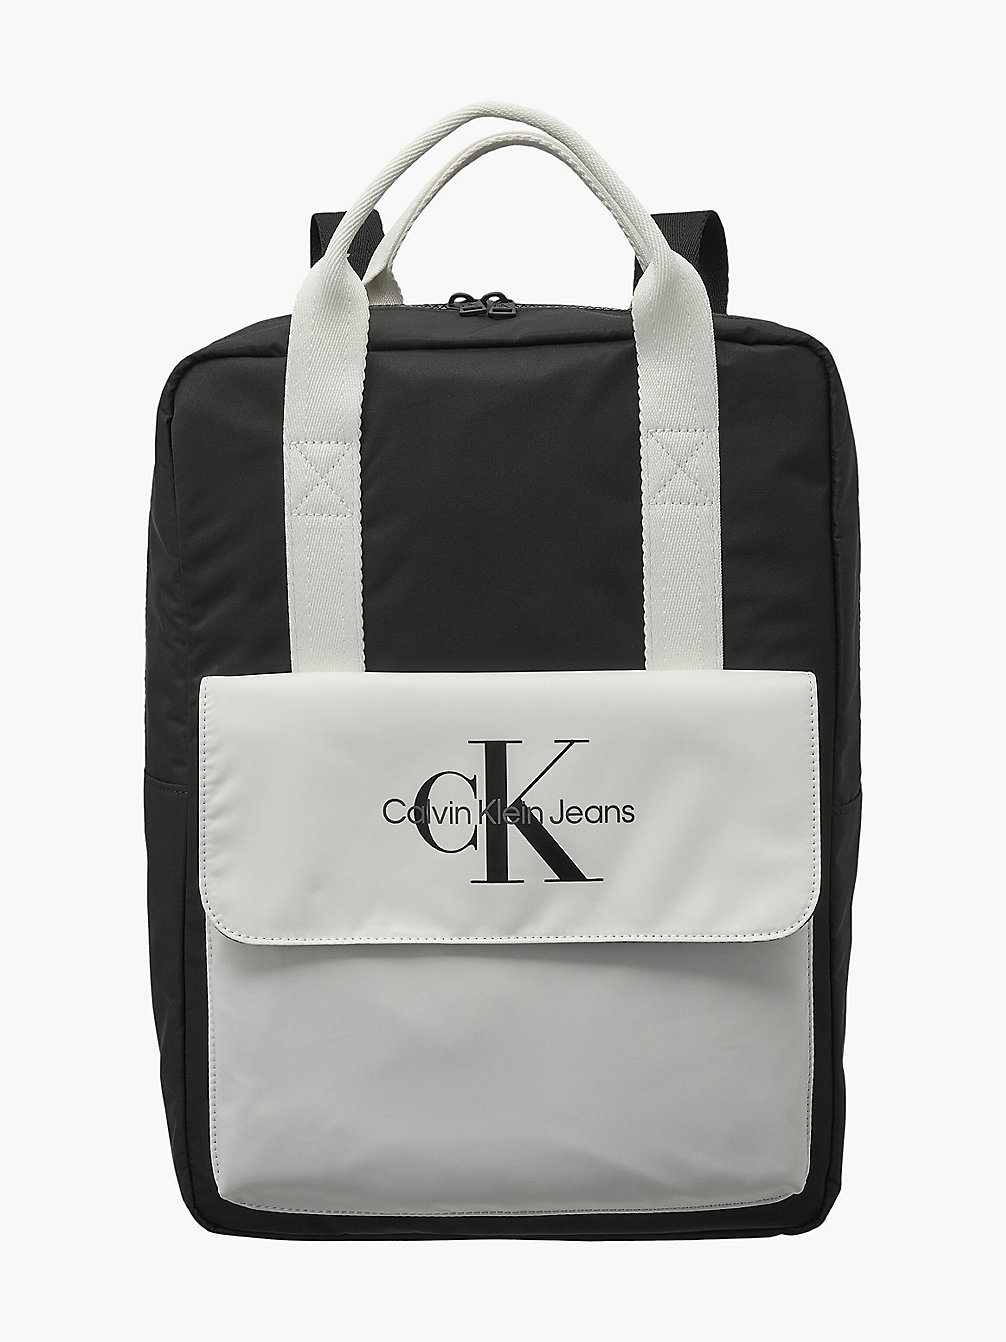 CK BLACK Unisex Colourblock Backpack undefined kids unisex Calvin Klein